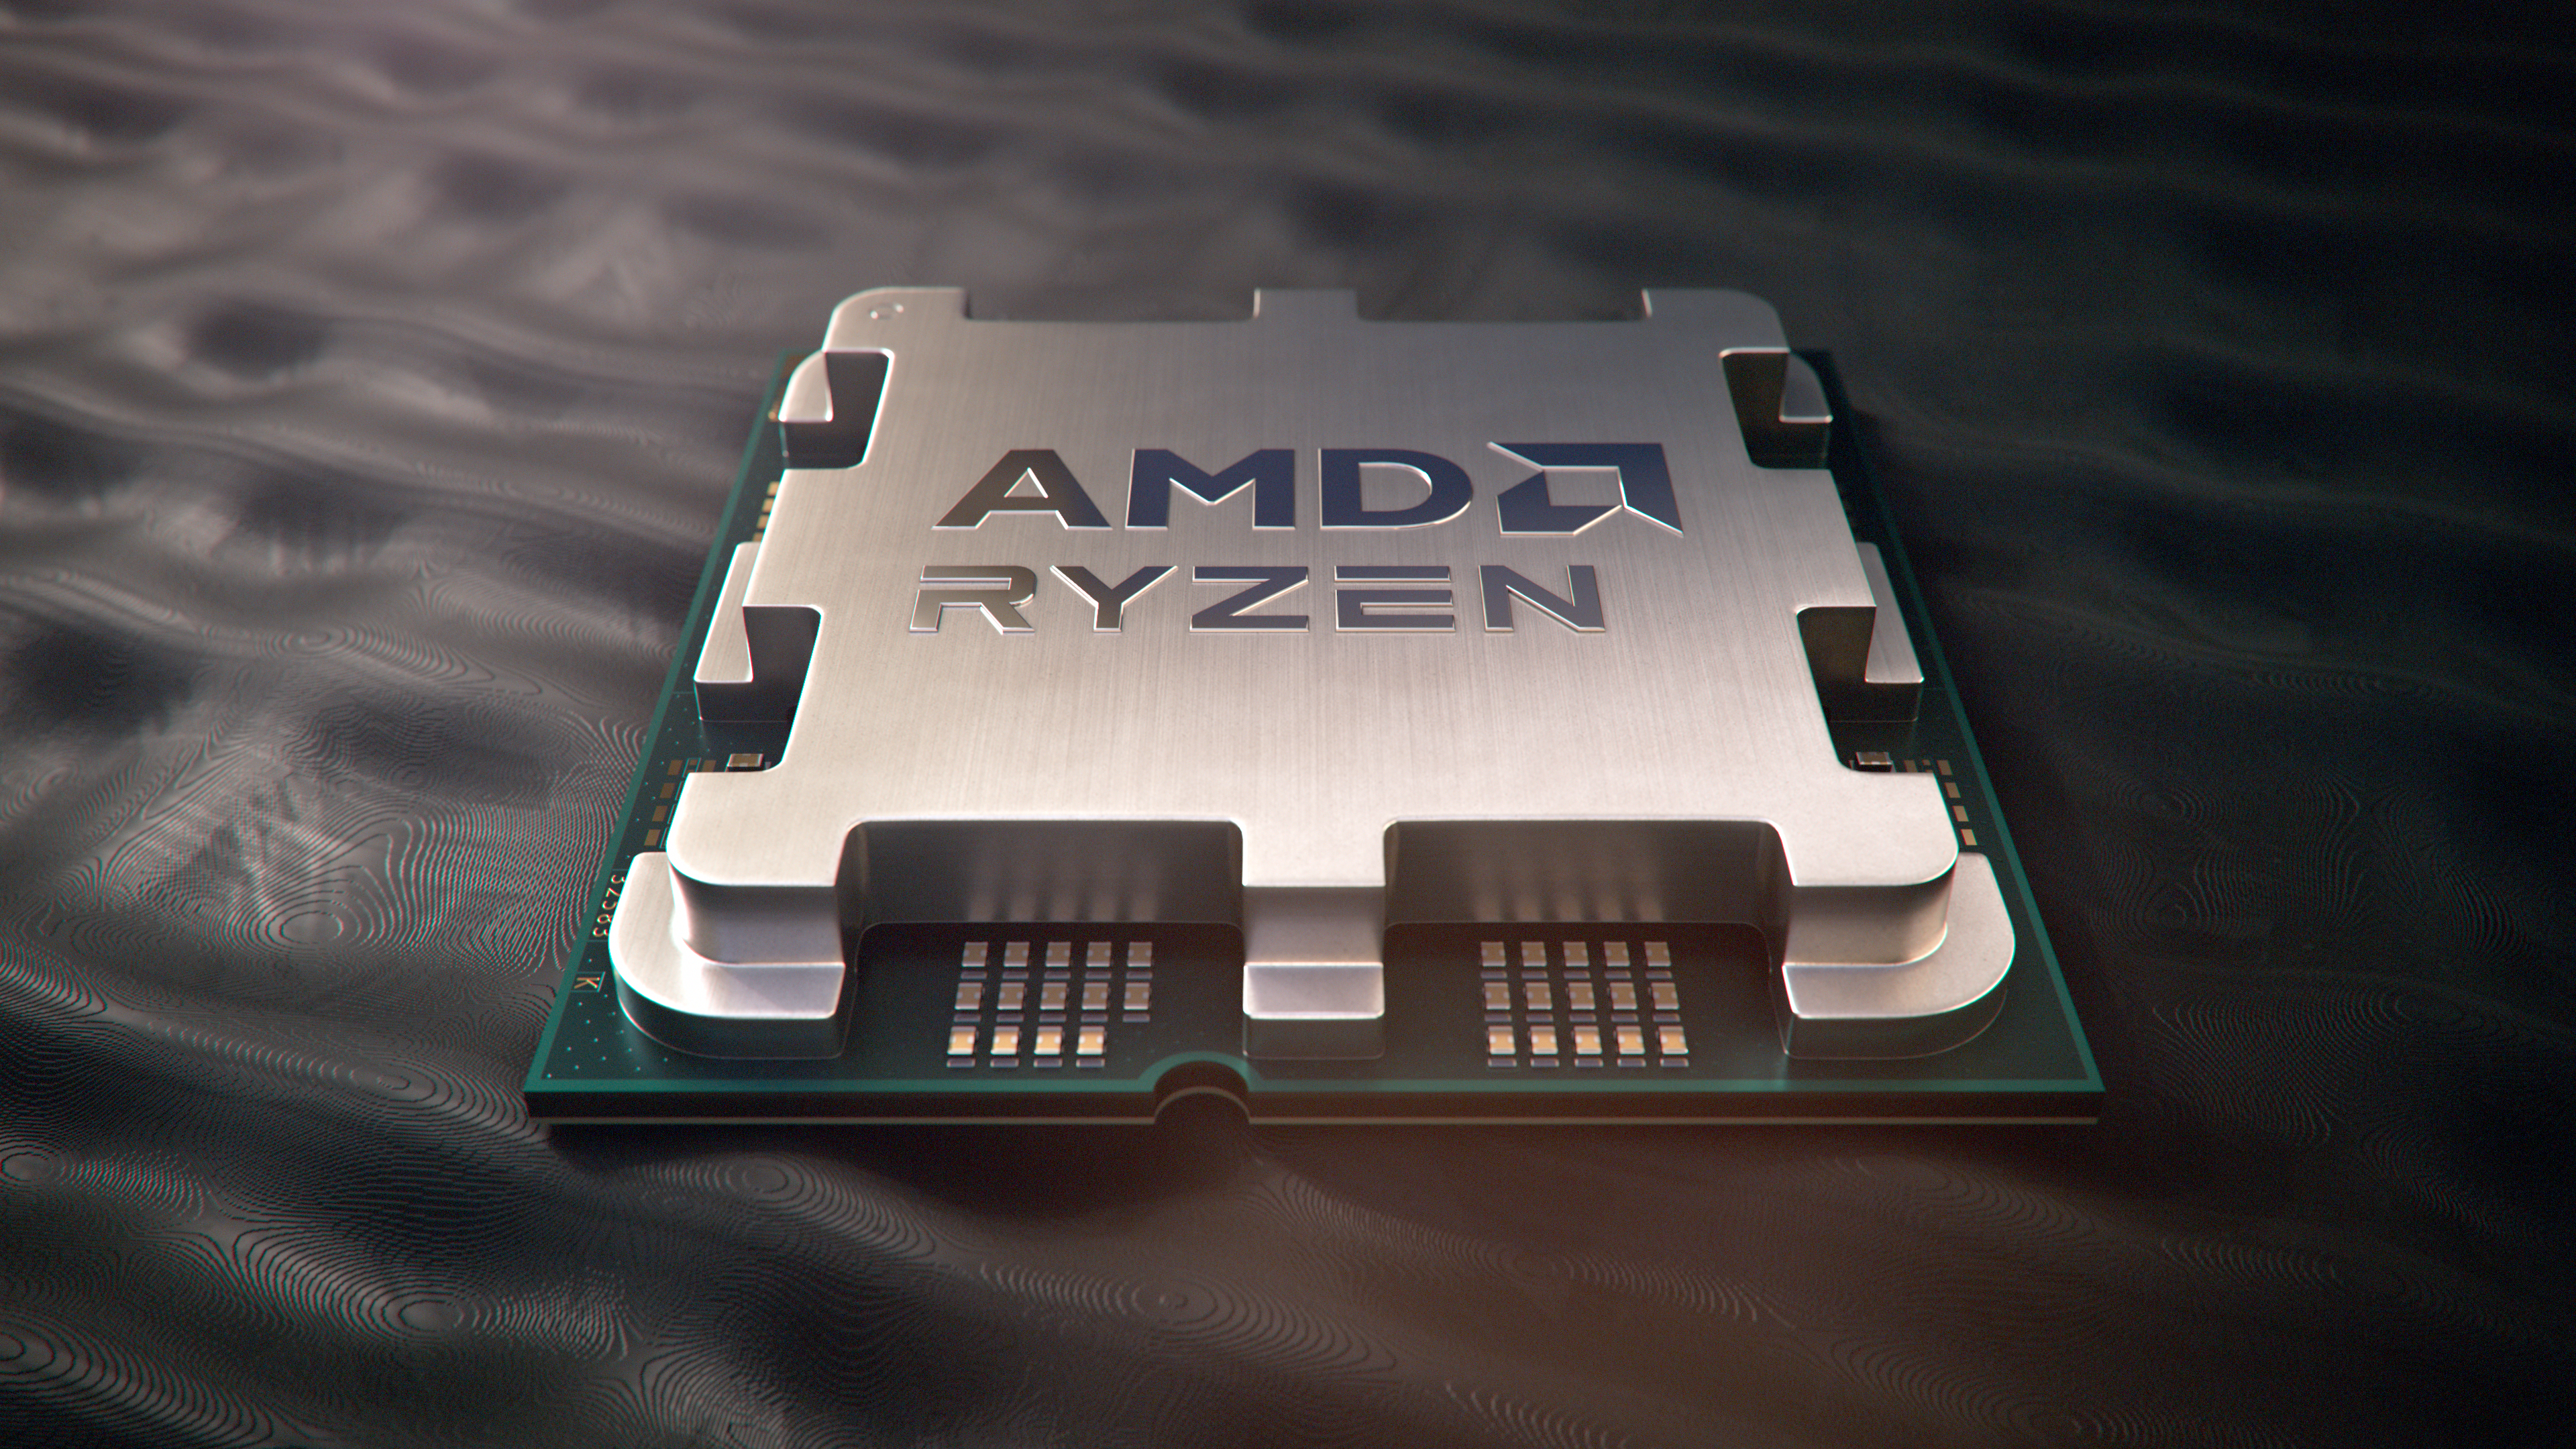 Render of AMD Ryzen chip